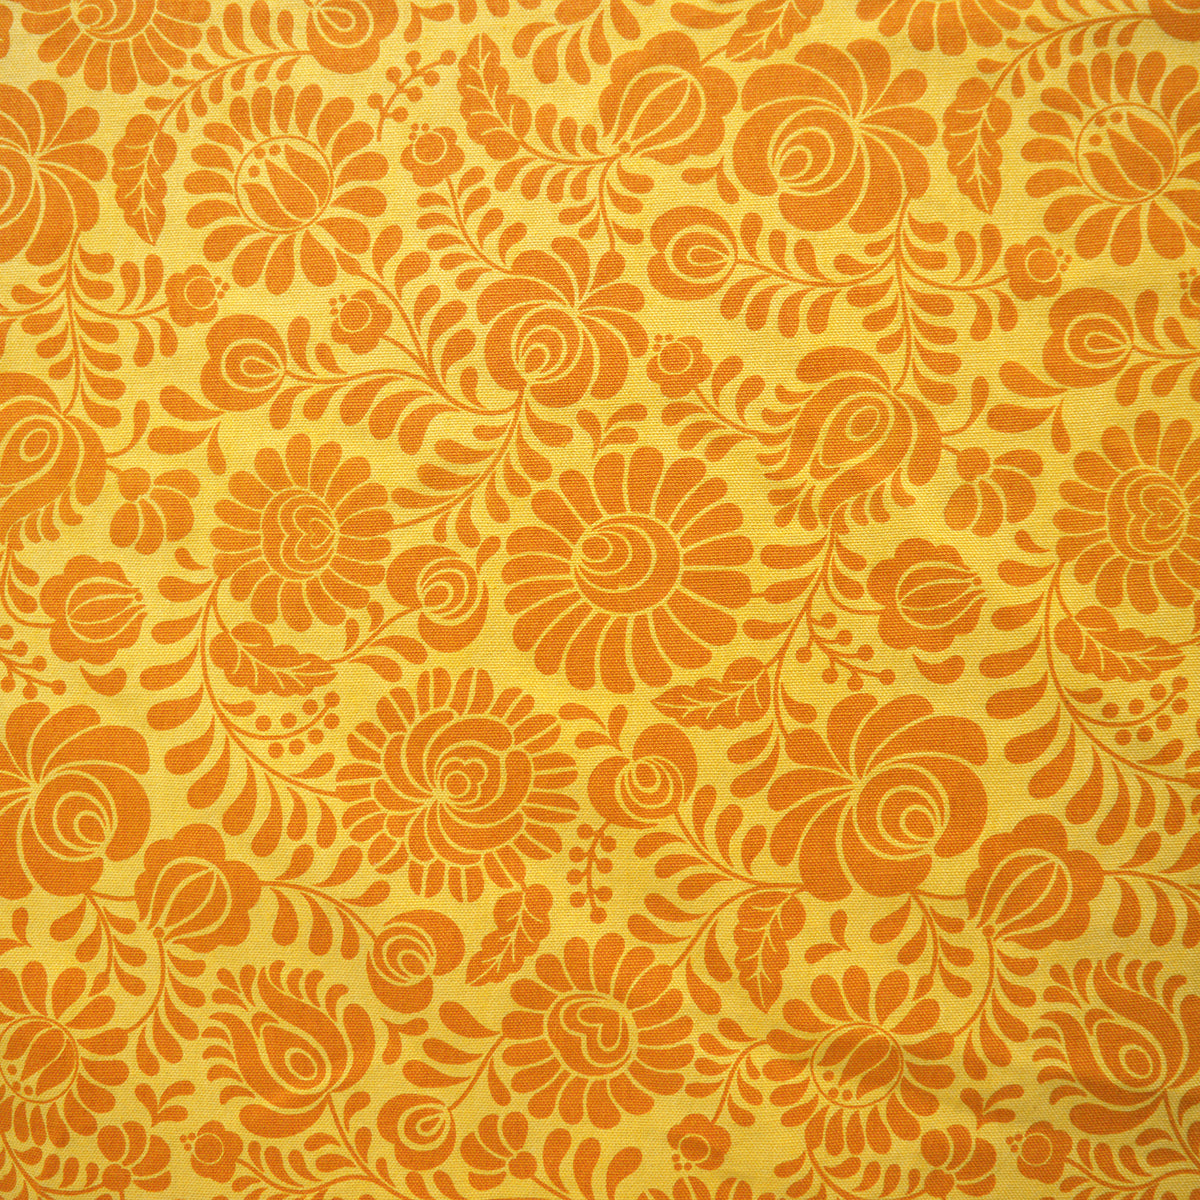 Mustard yellow printed fabric, Matyo Rose pattern, 100% cotton duck, by the metre, bold print